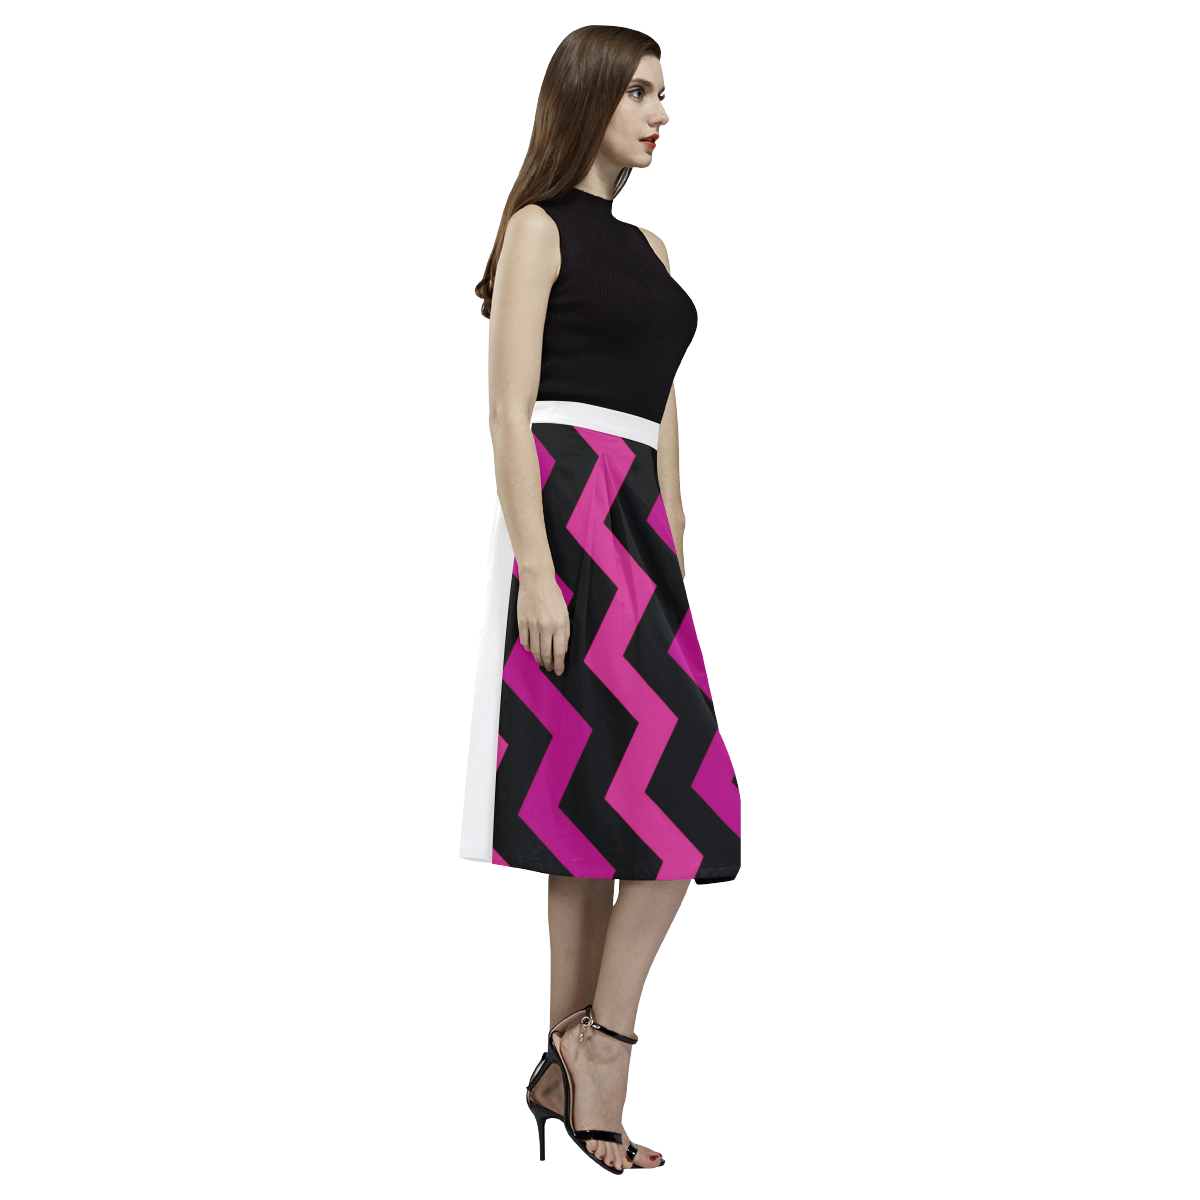 Luxury designers Skirt with zig-zag Stripes purple black Aoede Crepe Skirt (Model D16)